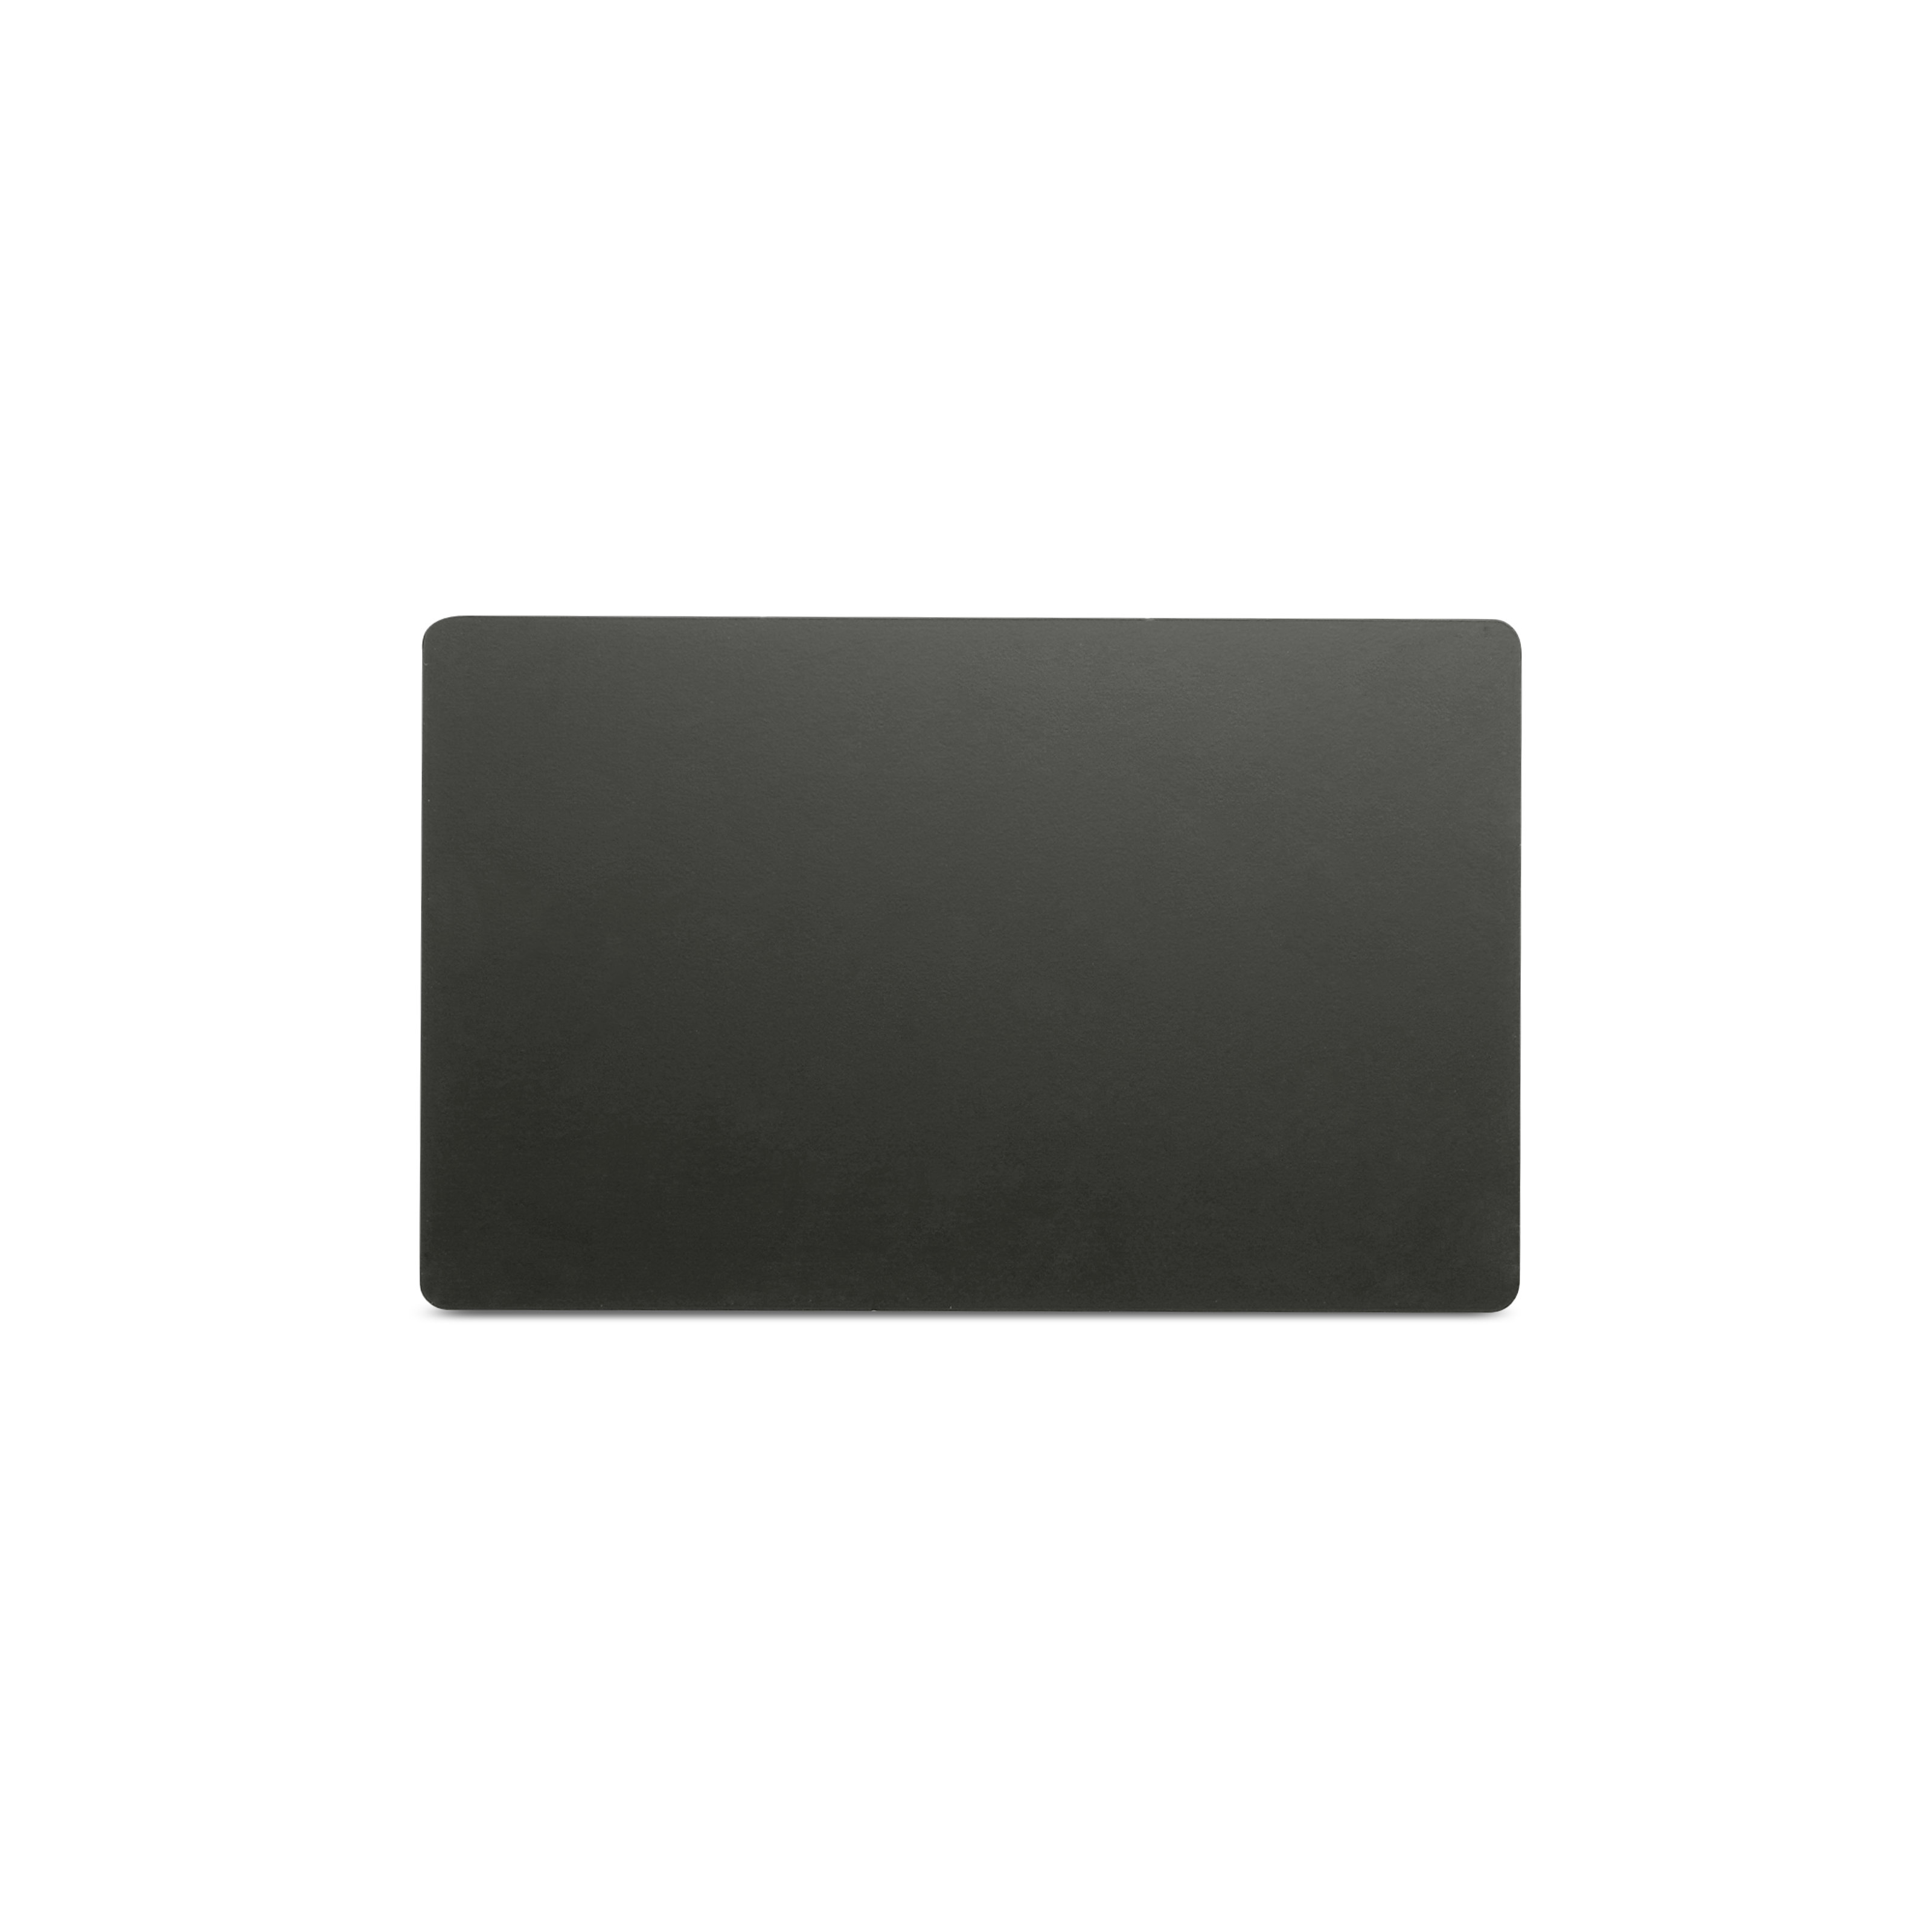 NFC-vCard - Digital business card - incl. NFC-vCard access - metal - 85.6 x 54 mm - black